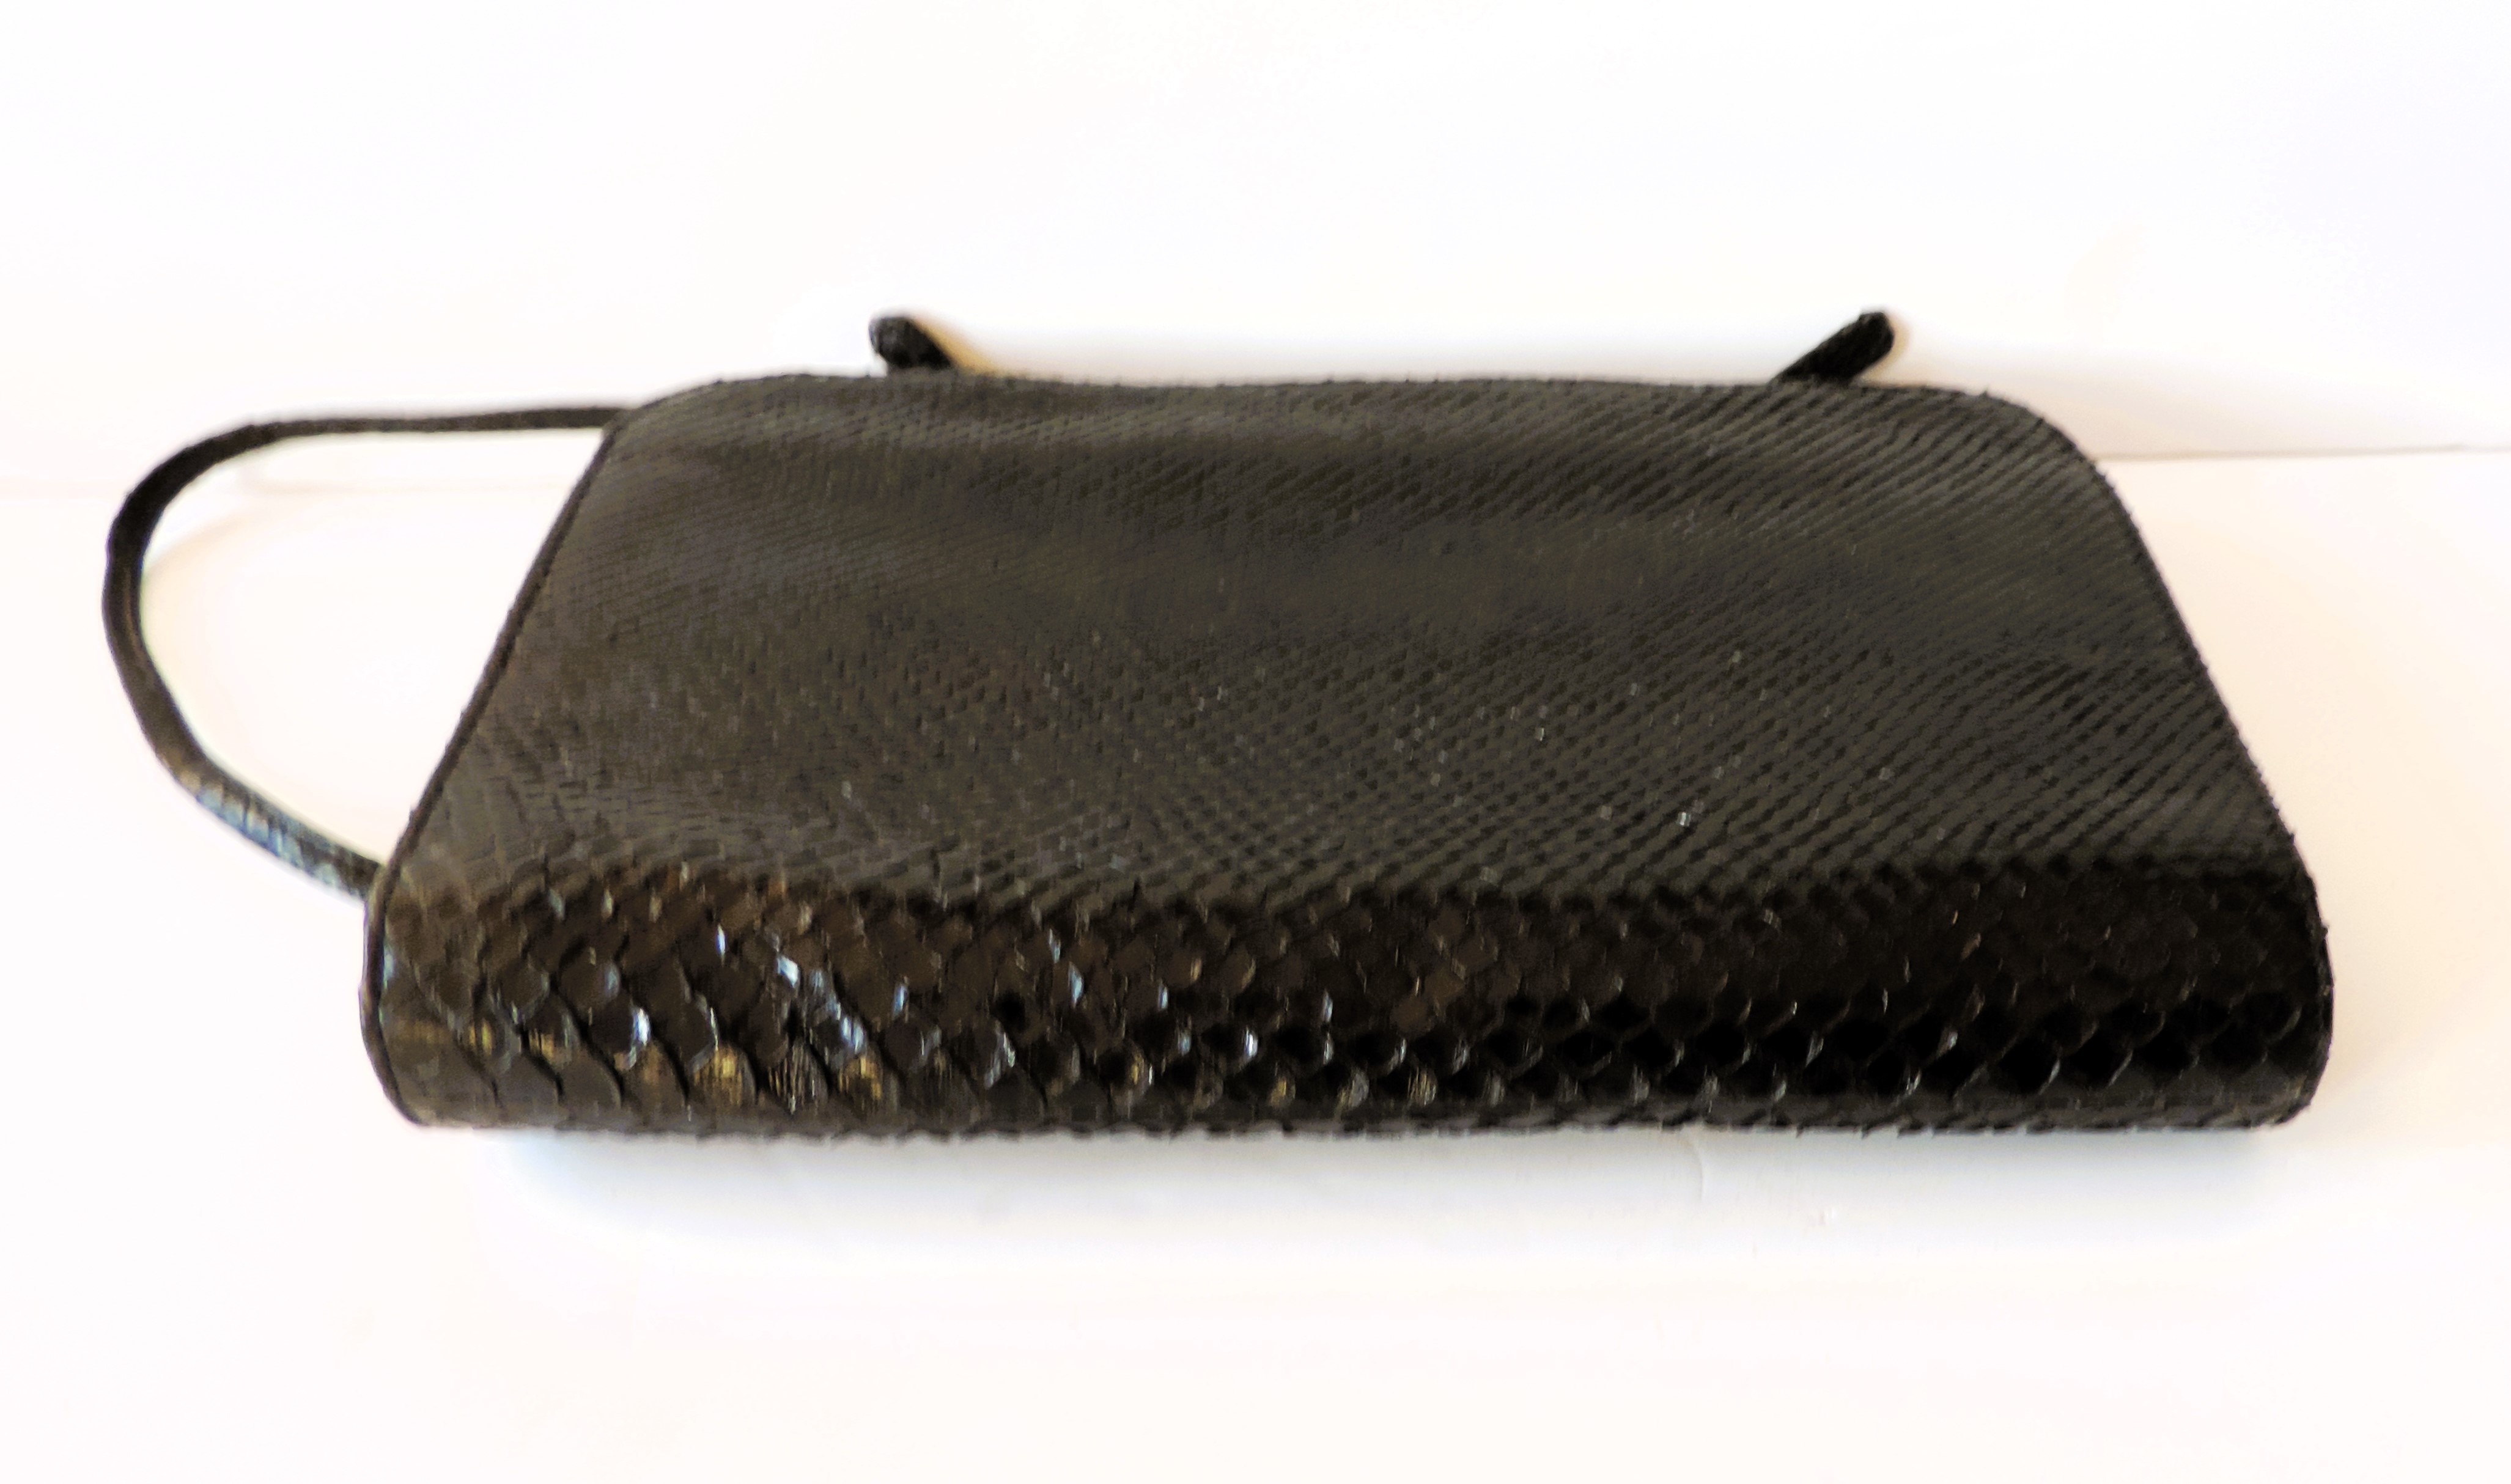 Vintage Giuseppe Zanotti Black Lizard Skin Shoulder Bag - Image 6 of 7